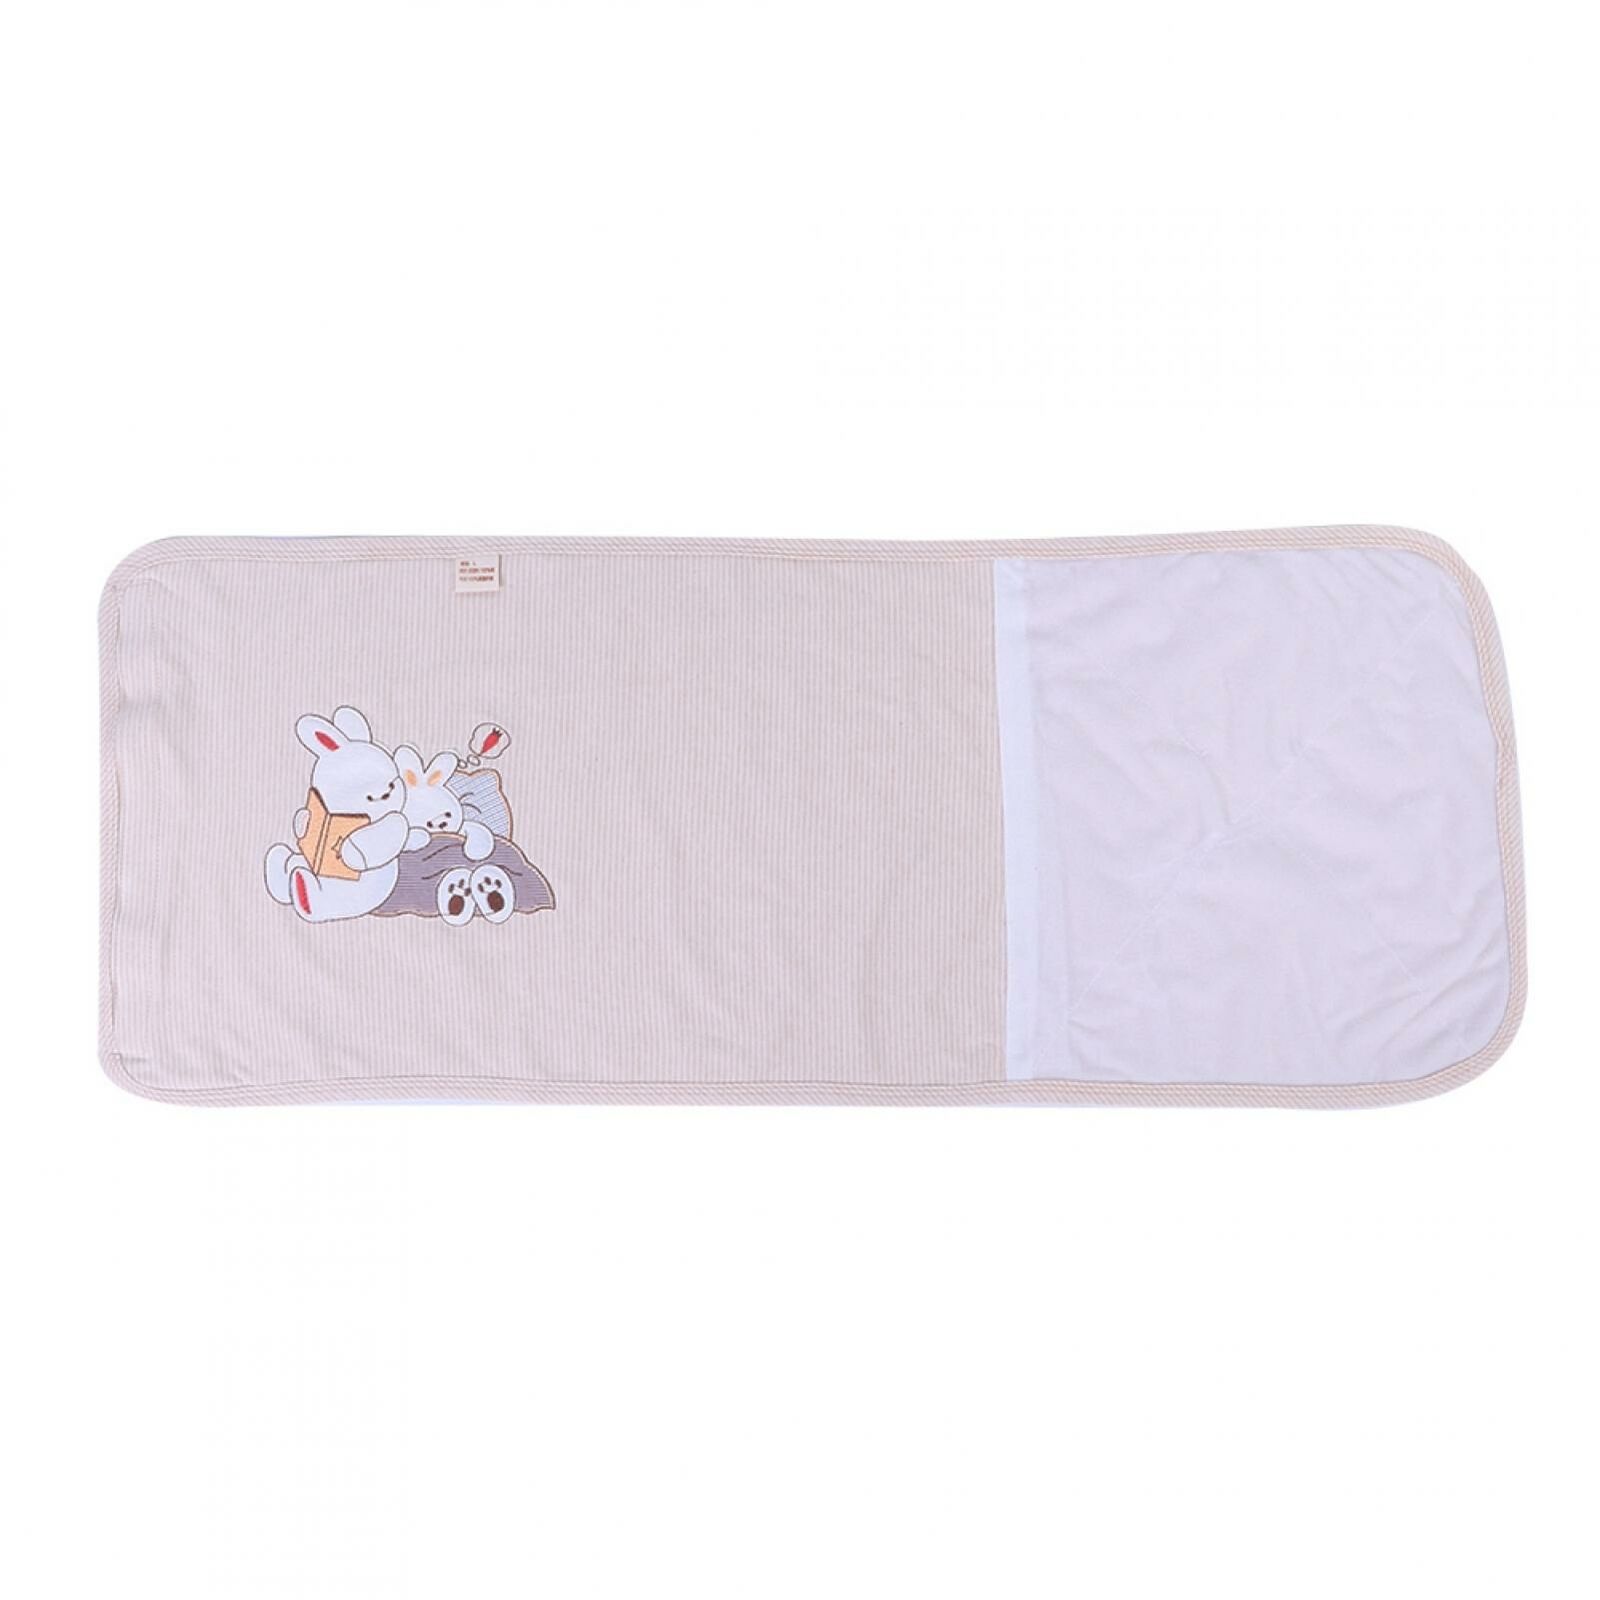 Portable Cotton Blend Baby Infant Abdomen Belly Cover Apron Warm Wrap Accessory